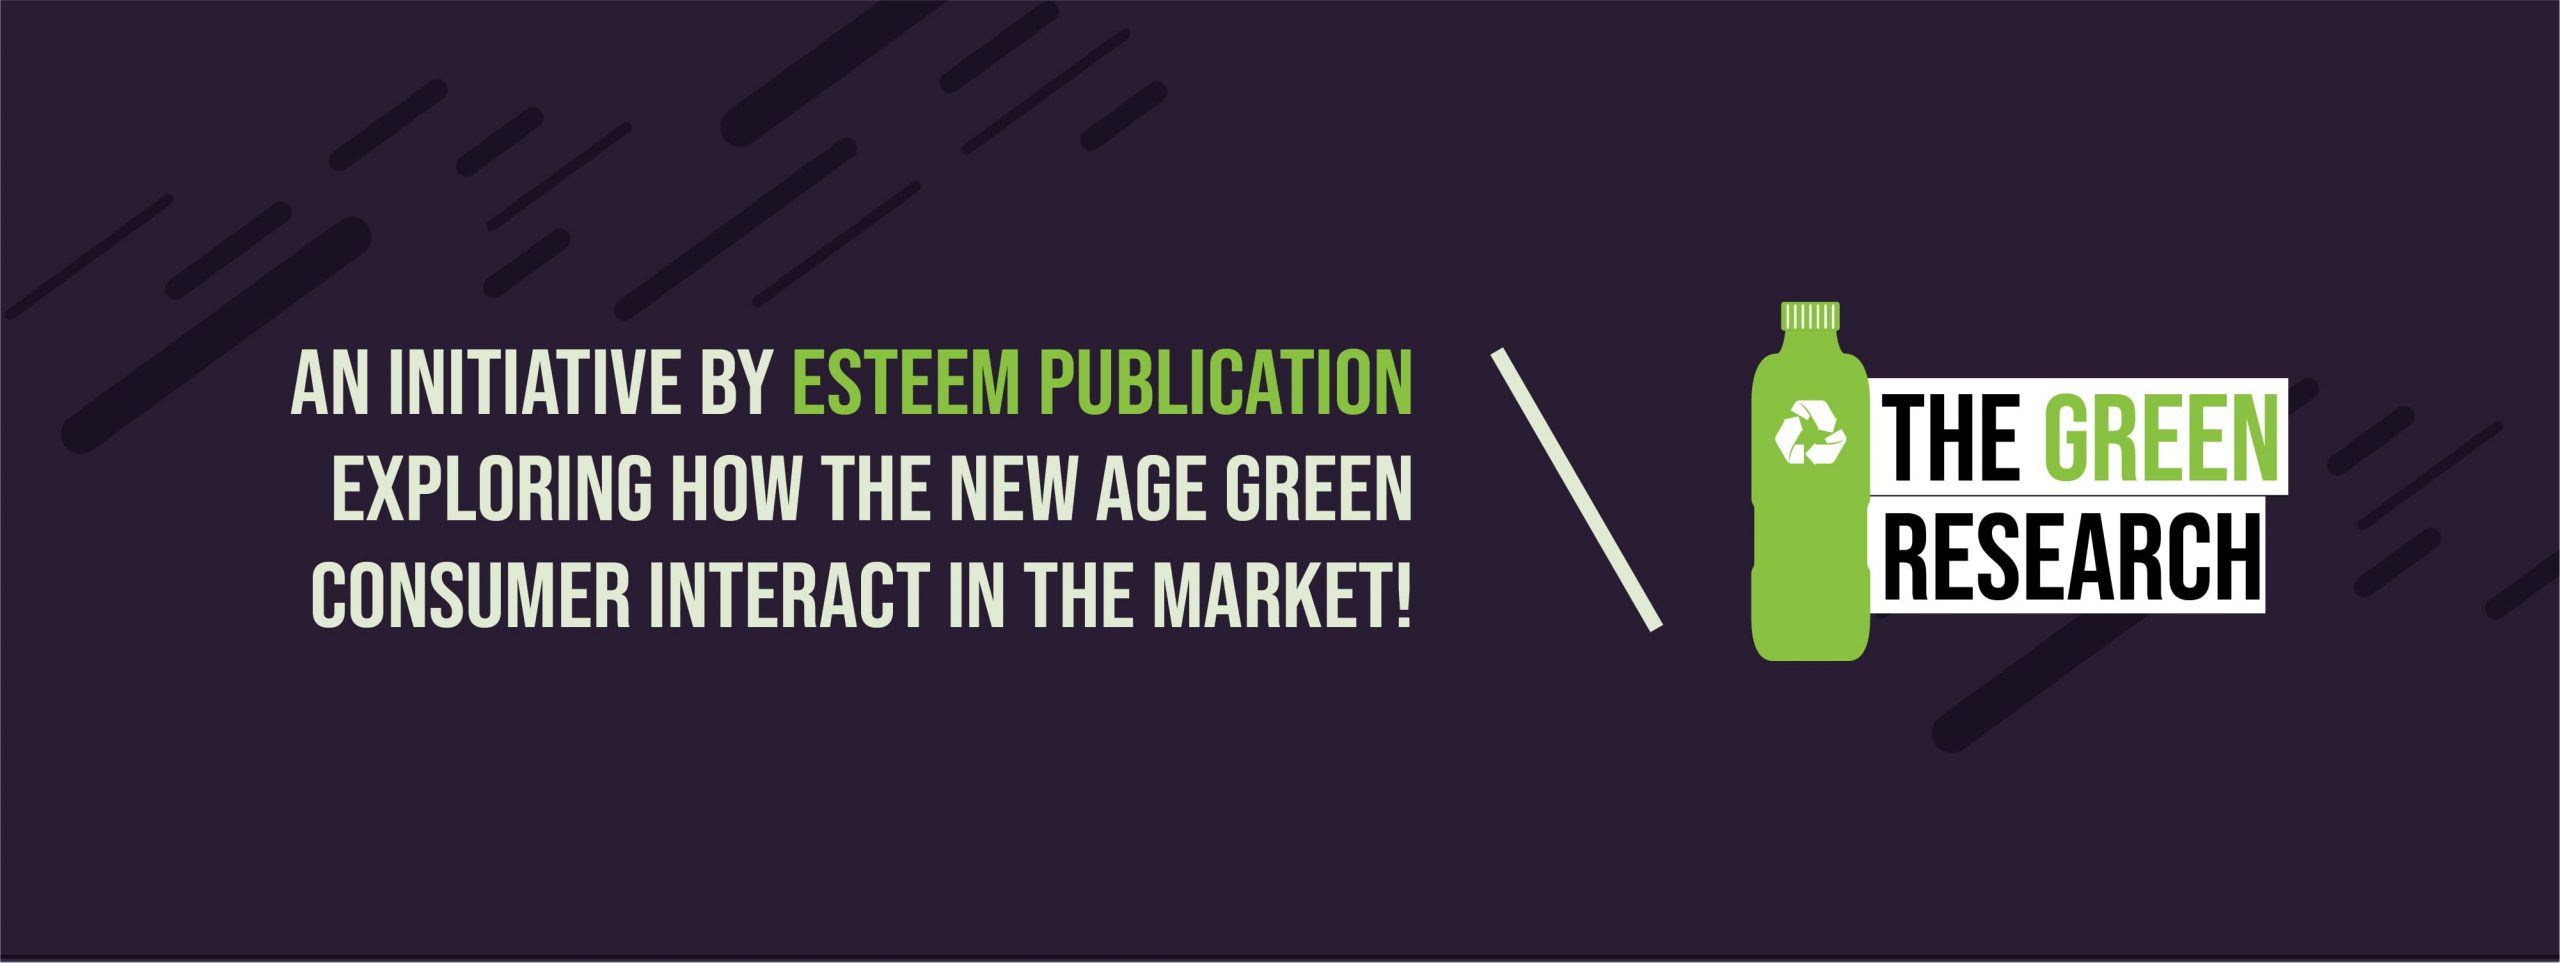 ESTEEM PUBLICATION GREEN RESEARCH